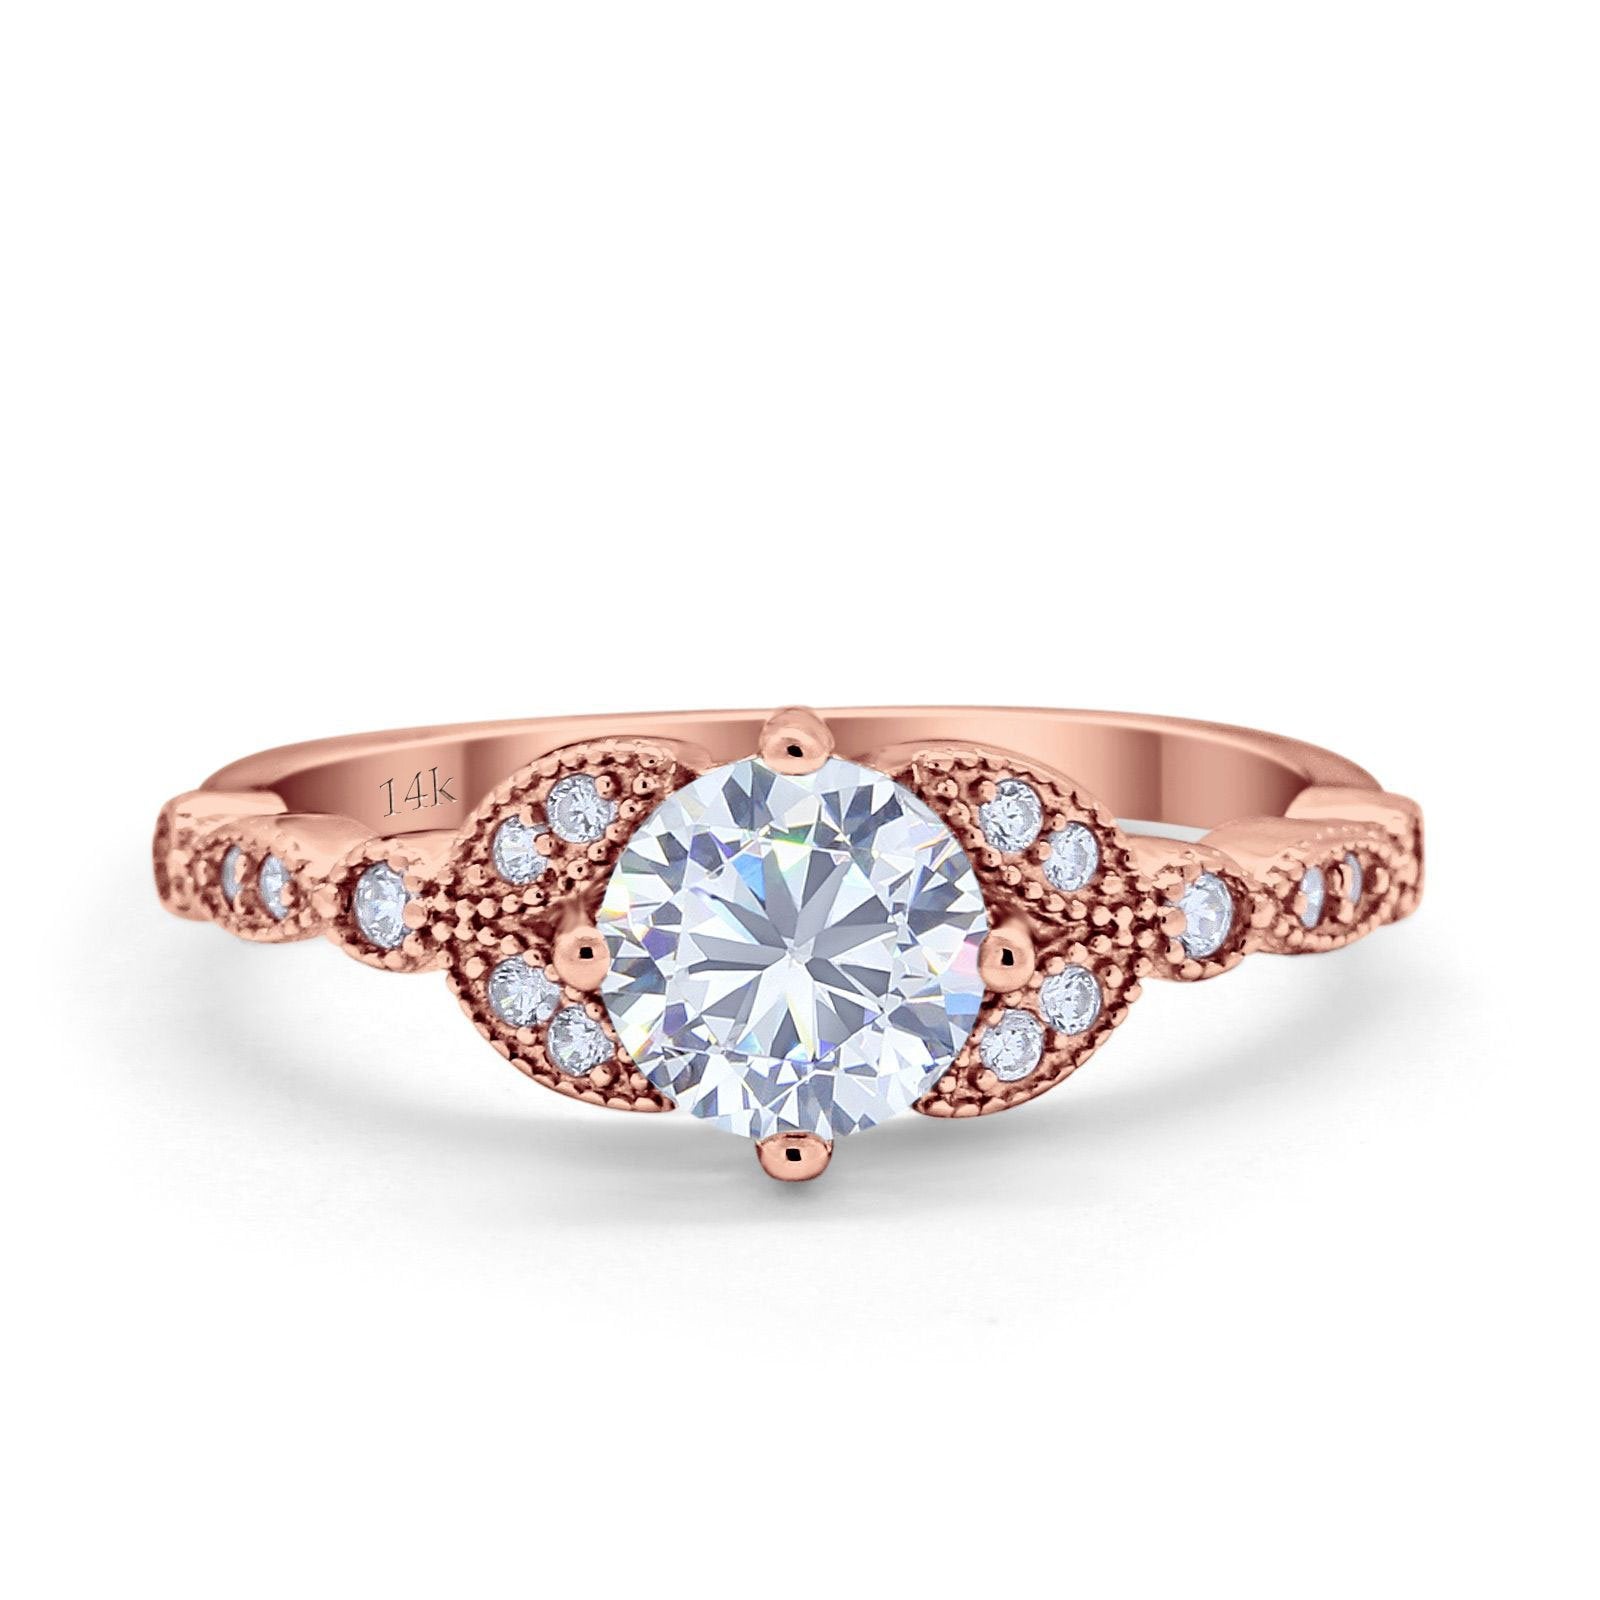 14K Gold Art Deco Round Shape Simulated Cubic Zirconia Wedding Bridal Ring